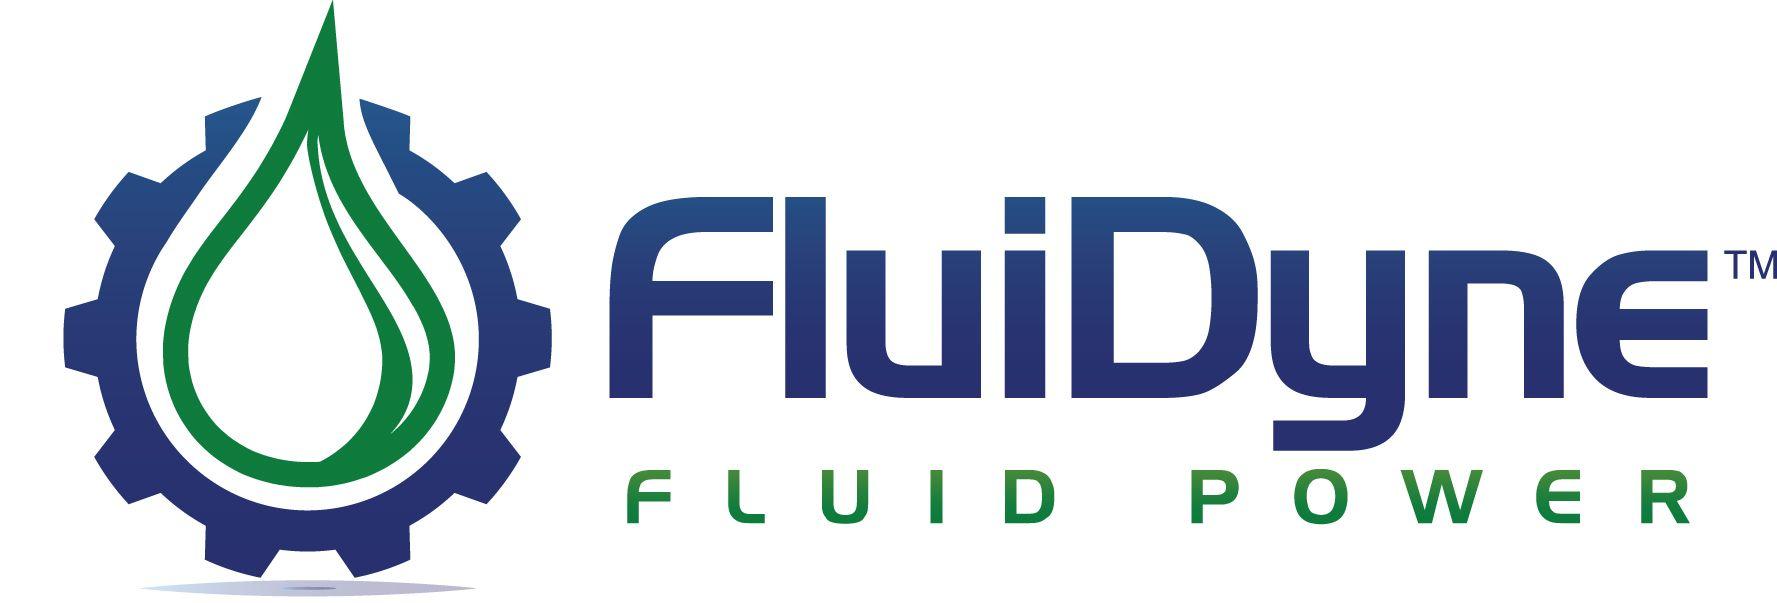 Hydraulics Logo - FPC&E